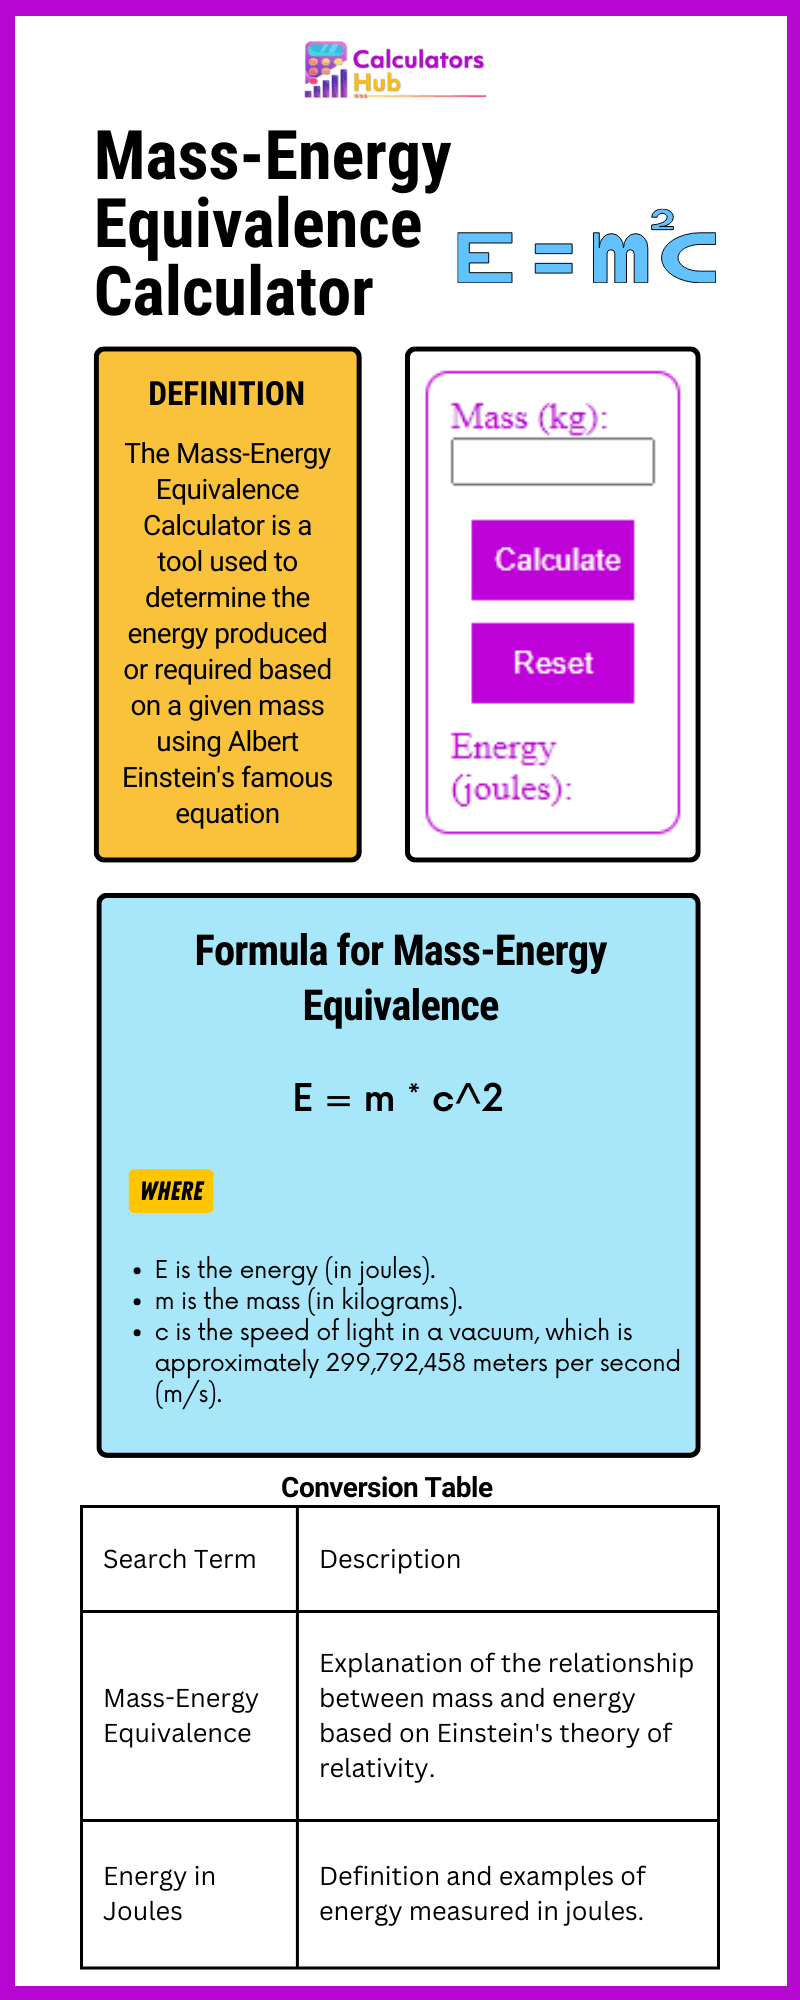 Mass-Energy Equivalence Calculator